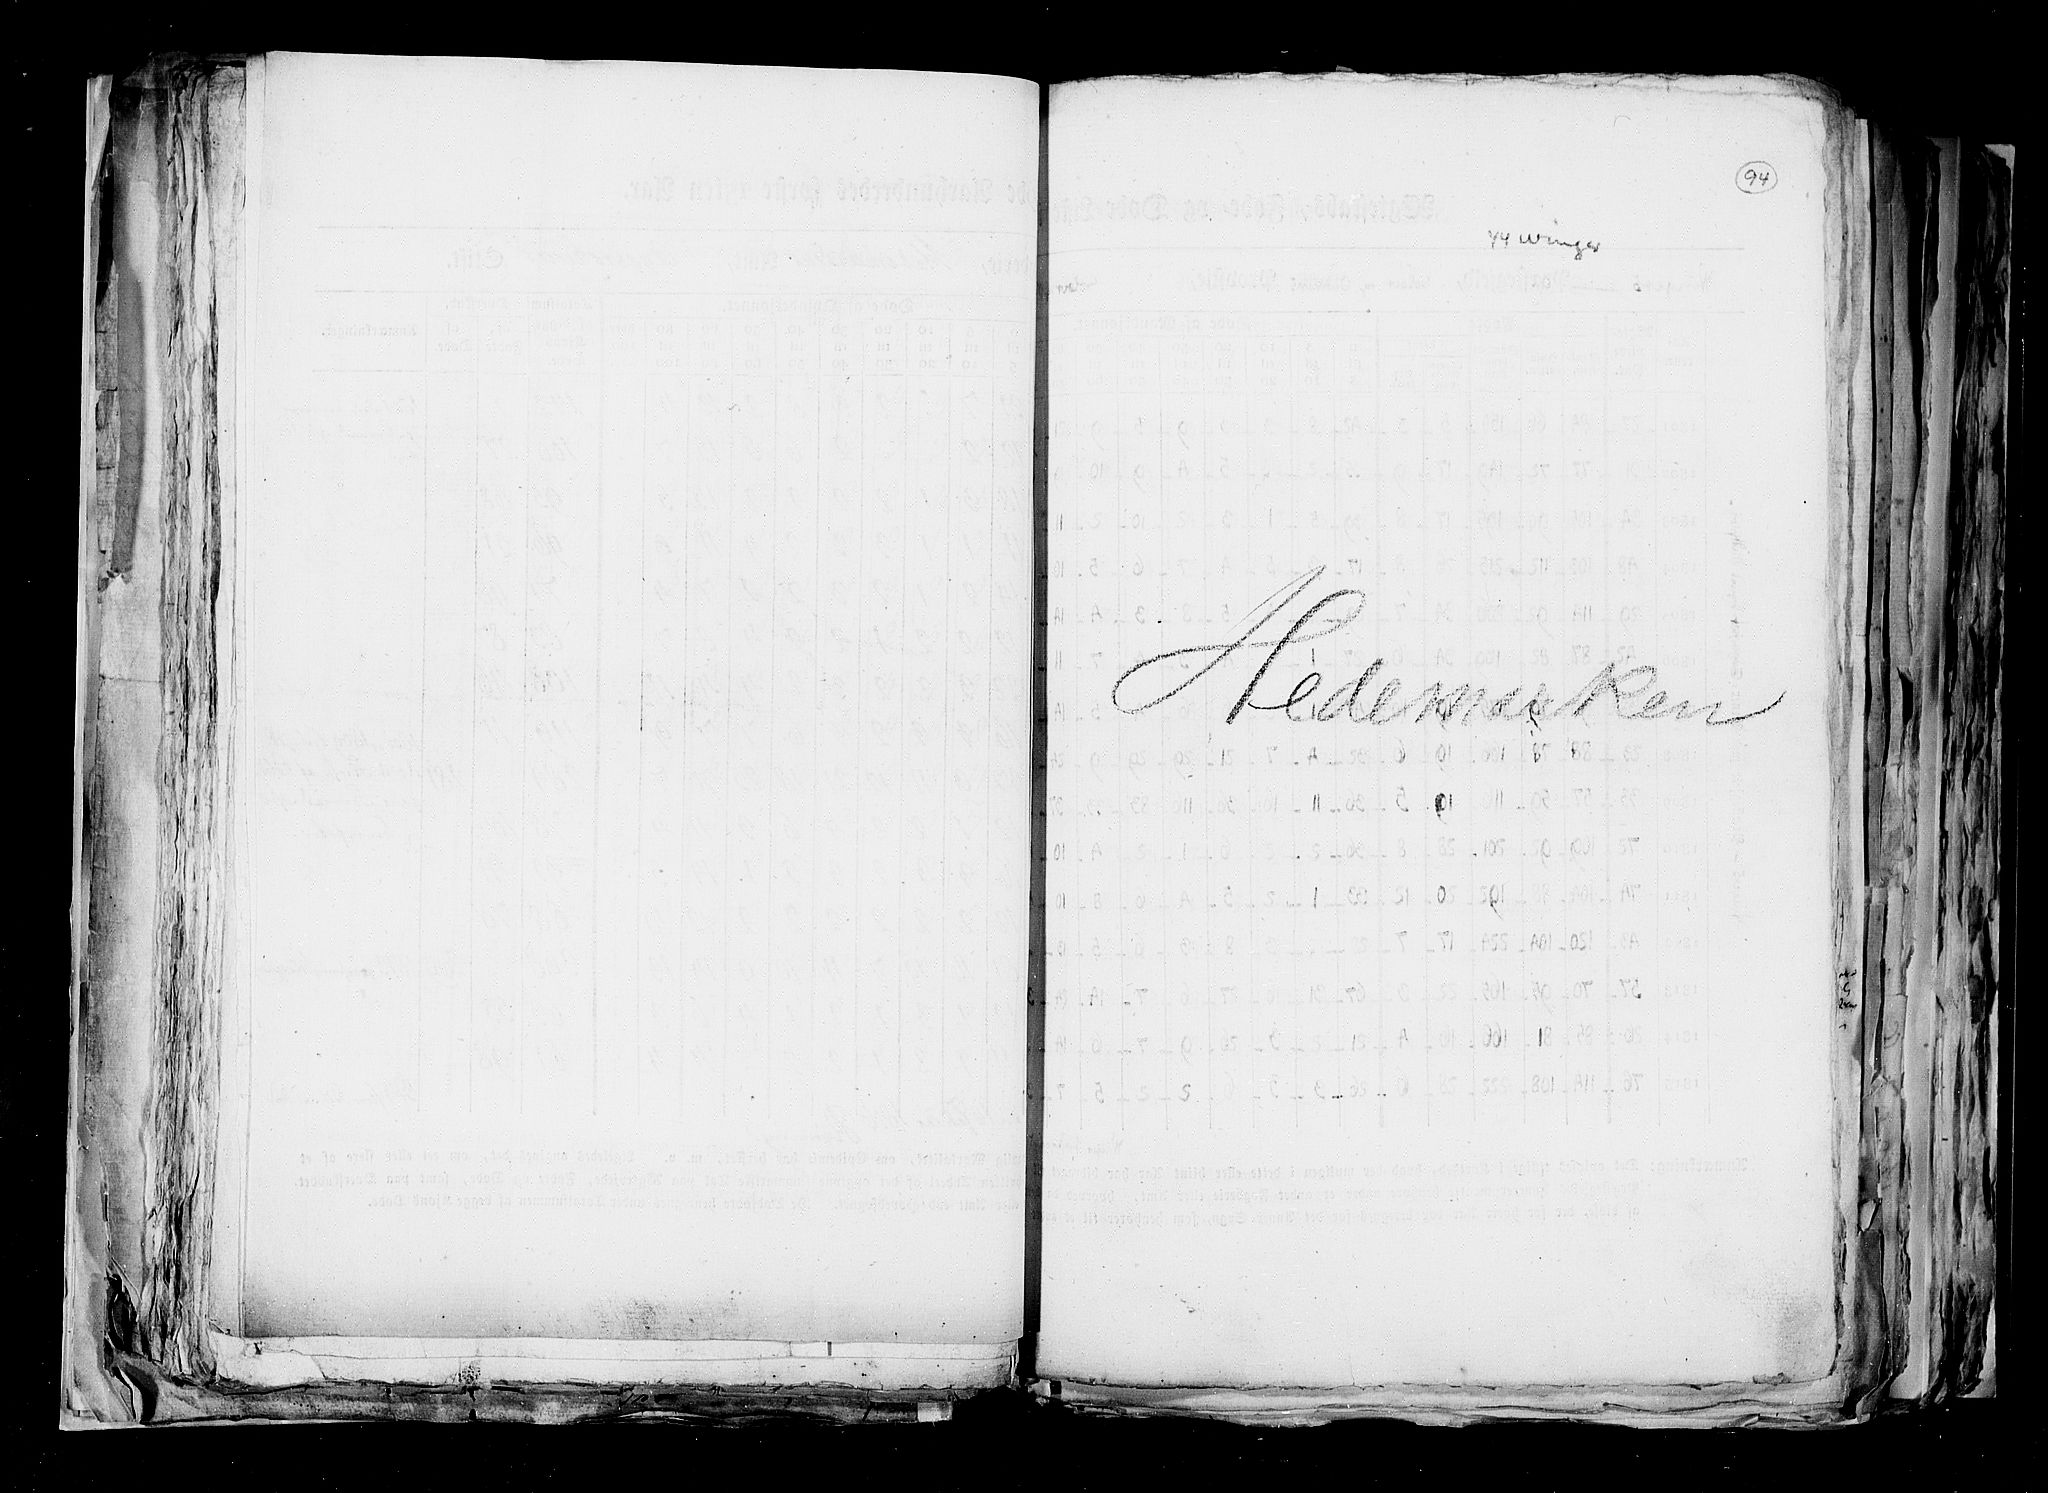 RA, Census 1815, vol. 6: Akershus stift and Kristiansand stift, 1815, p. 94